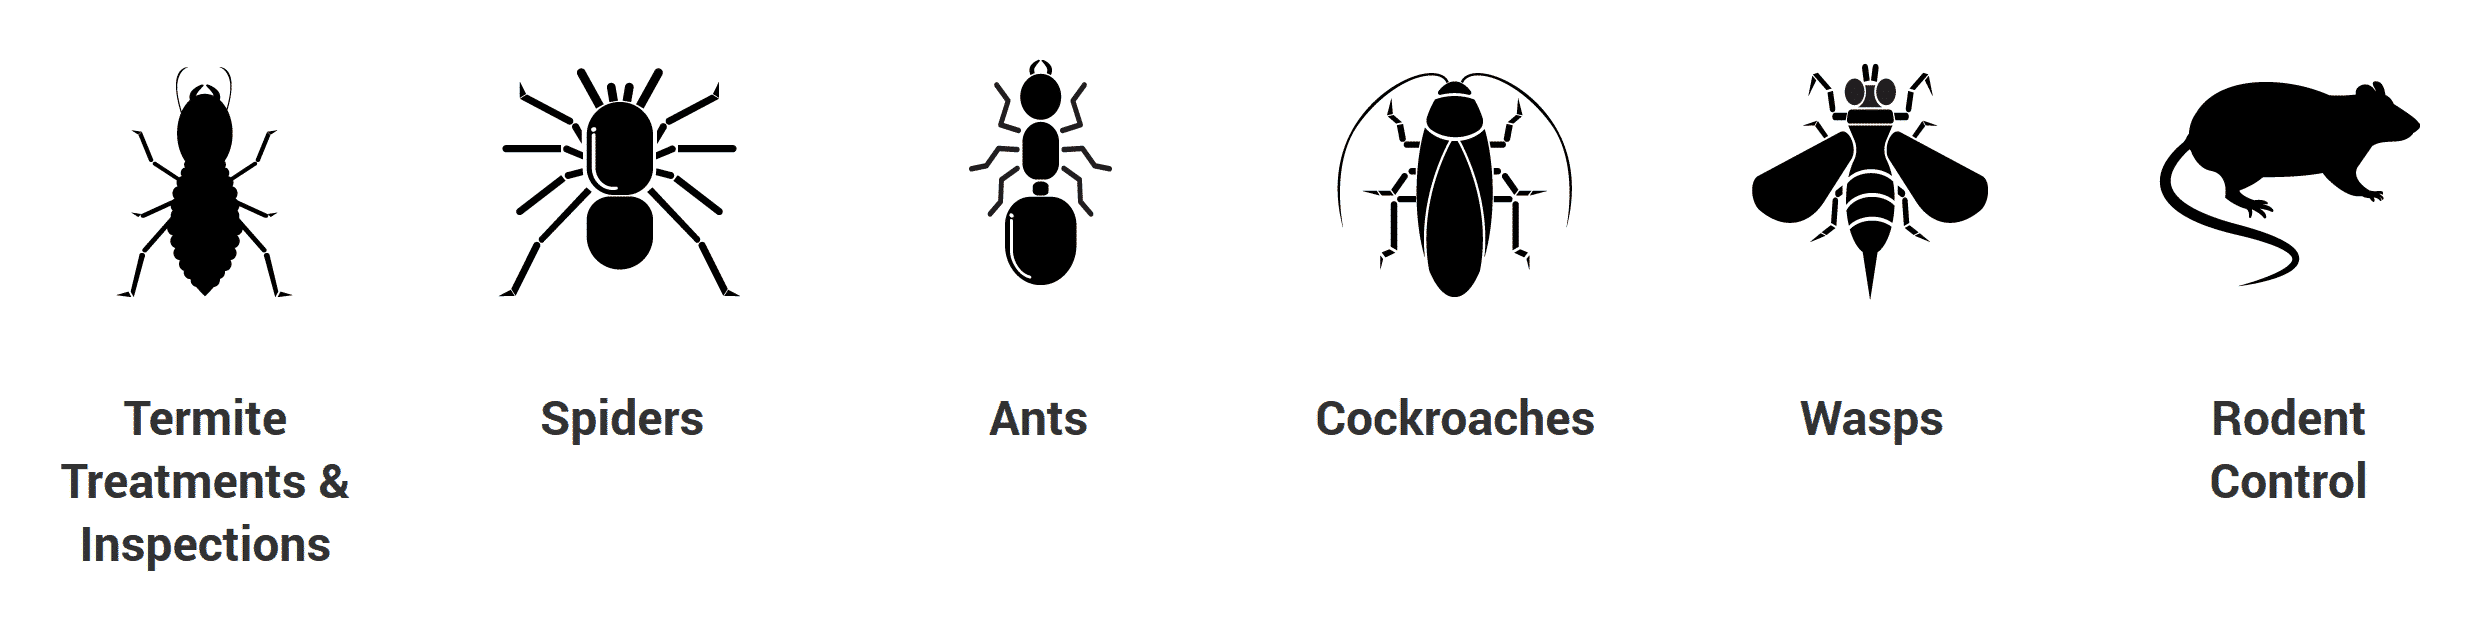 Pest image